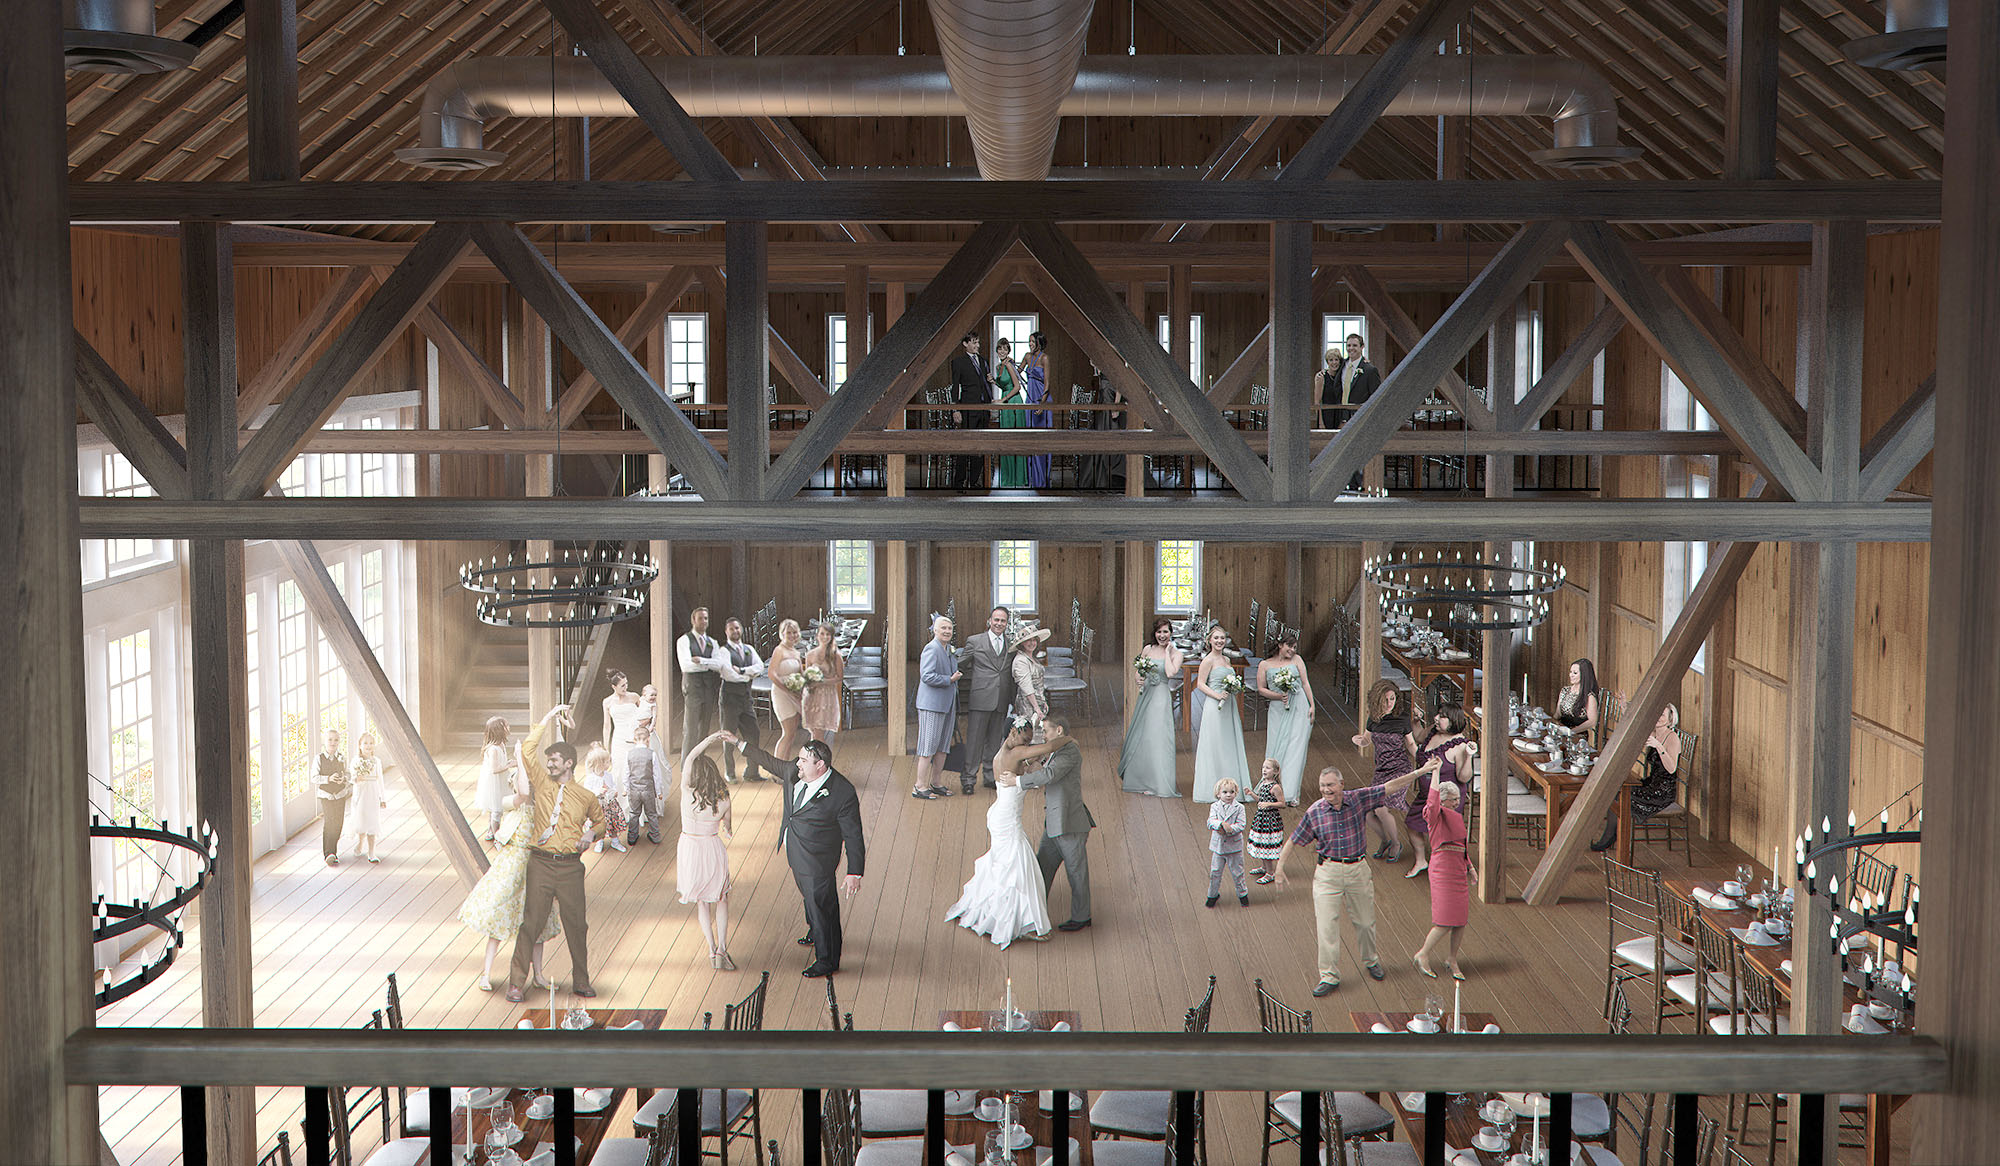 Barn interior showing a virtual wedding.